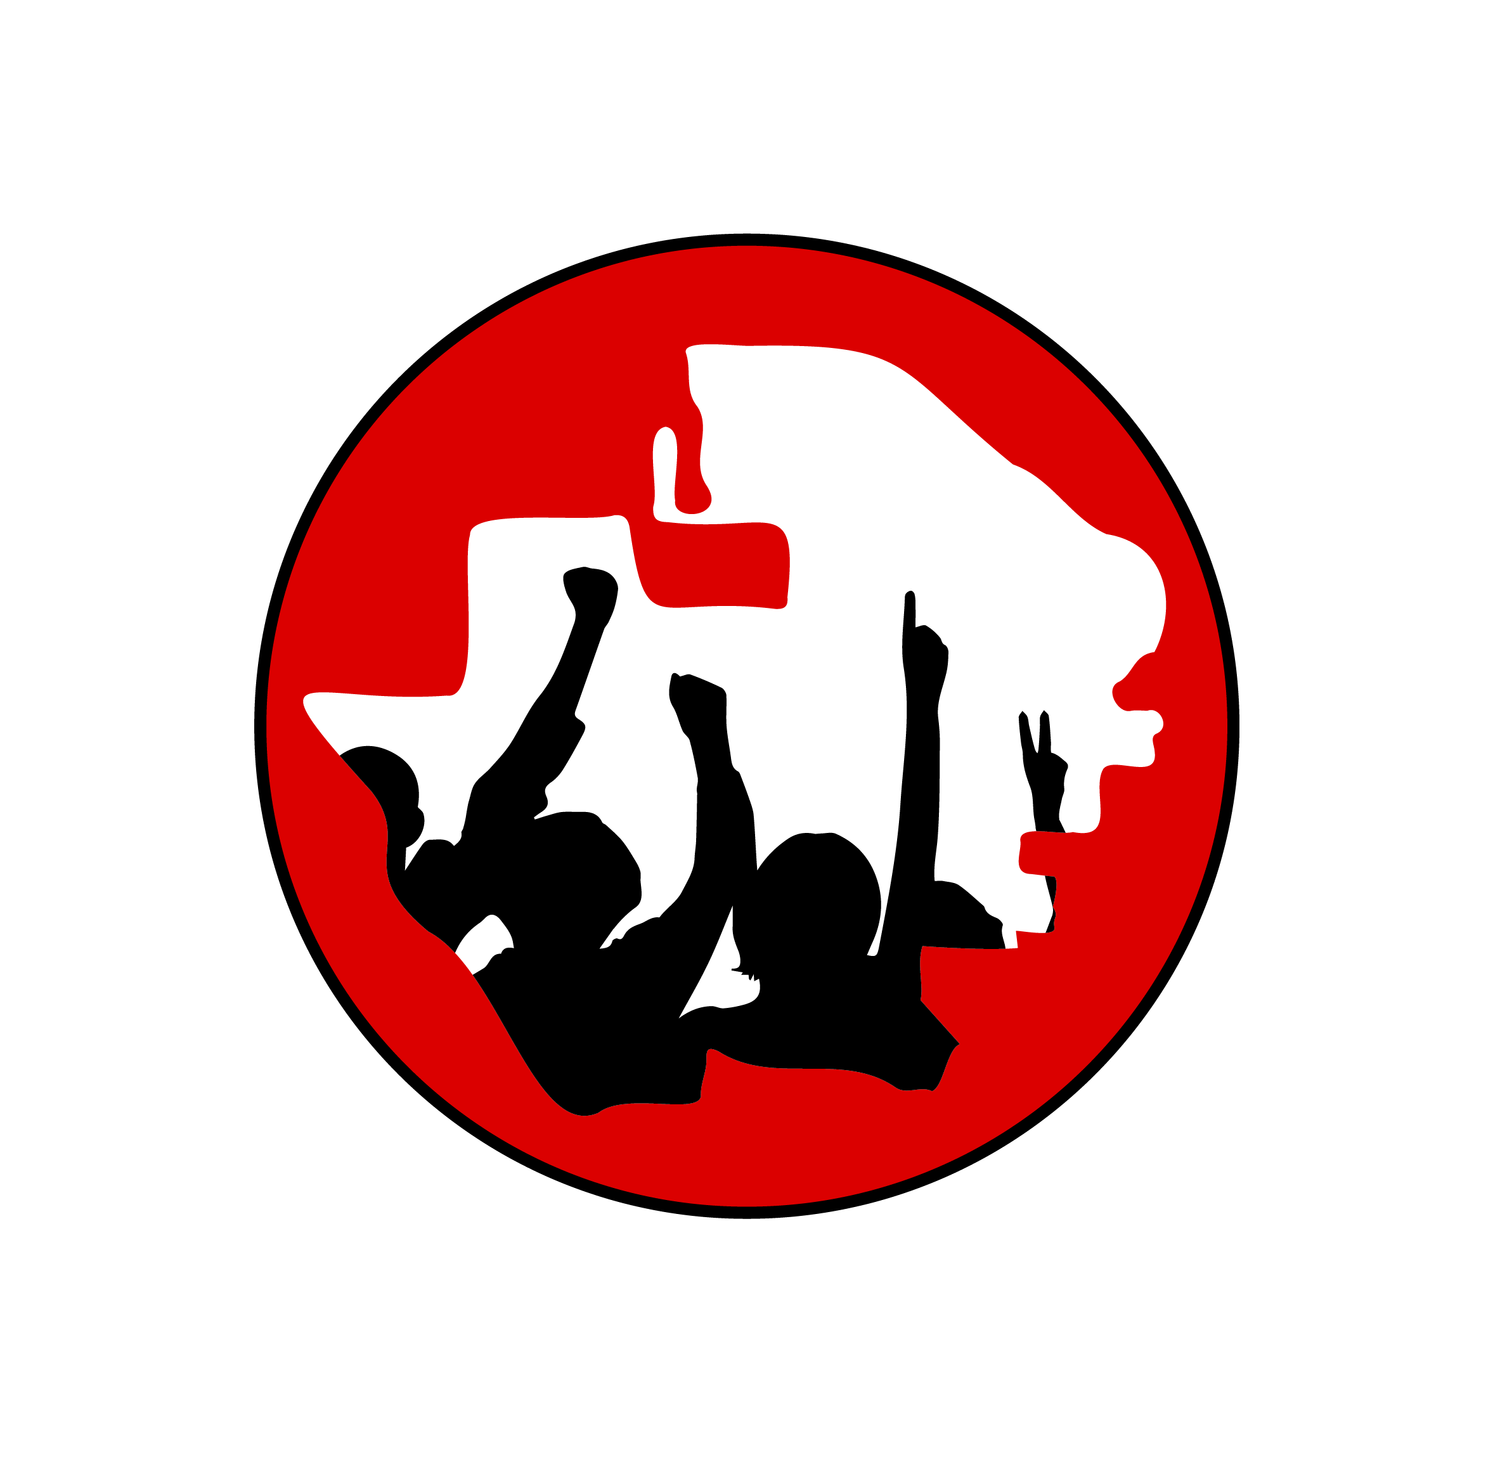 Skyway Coalition